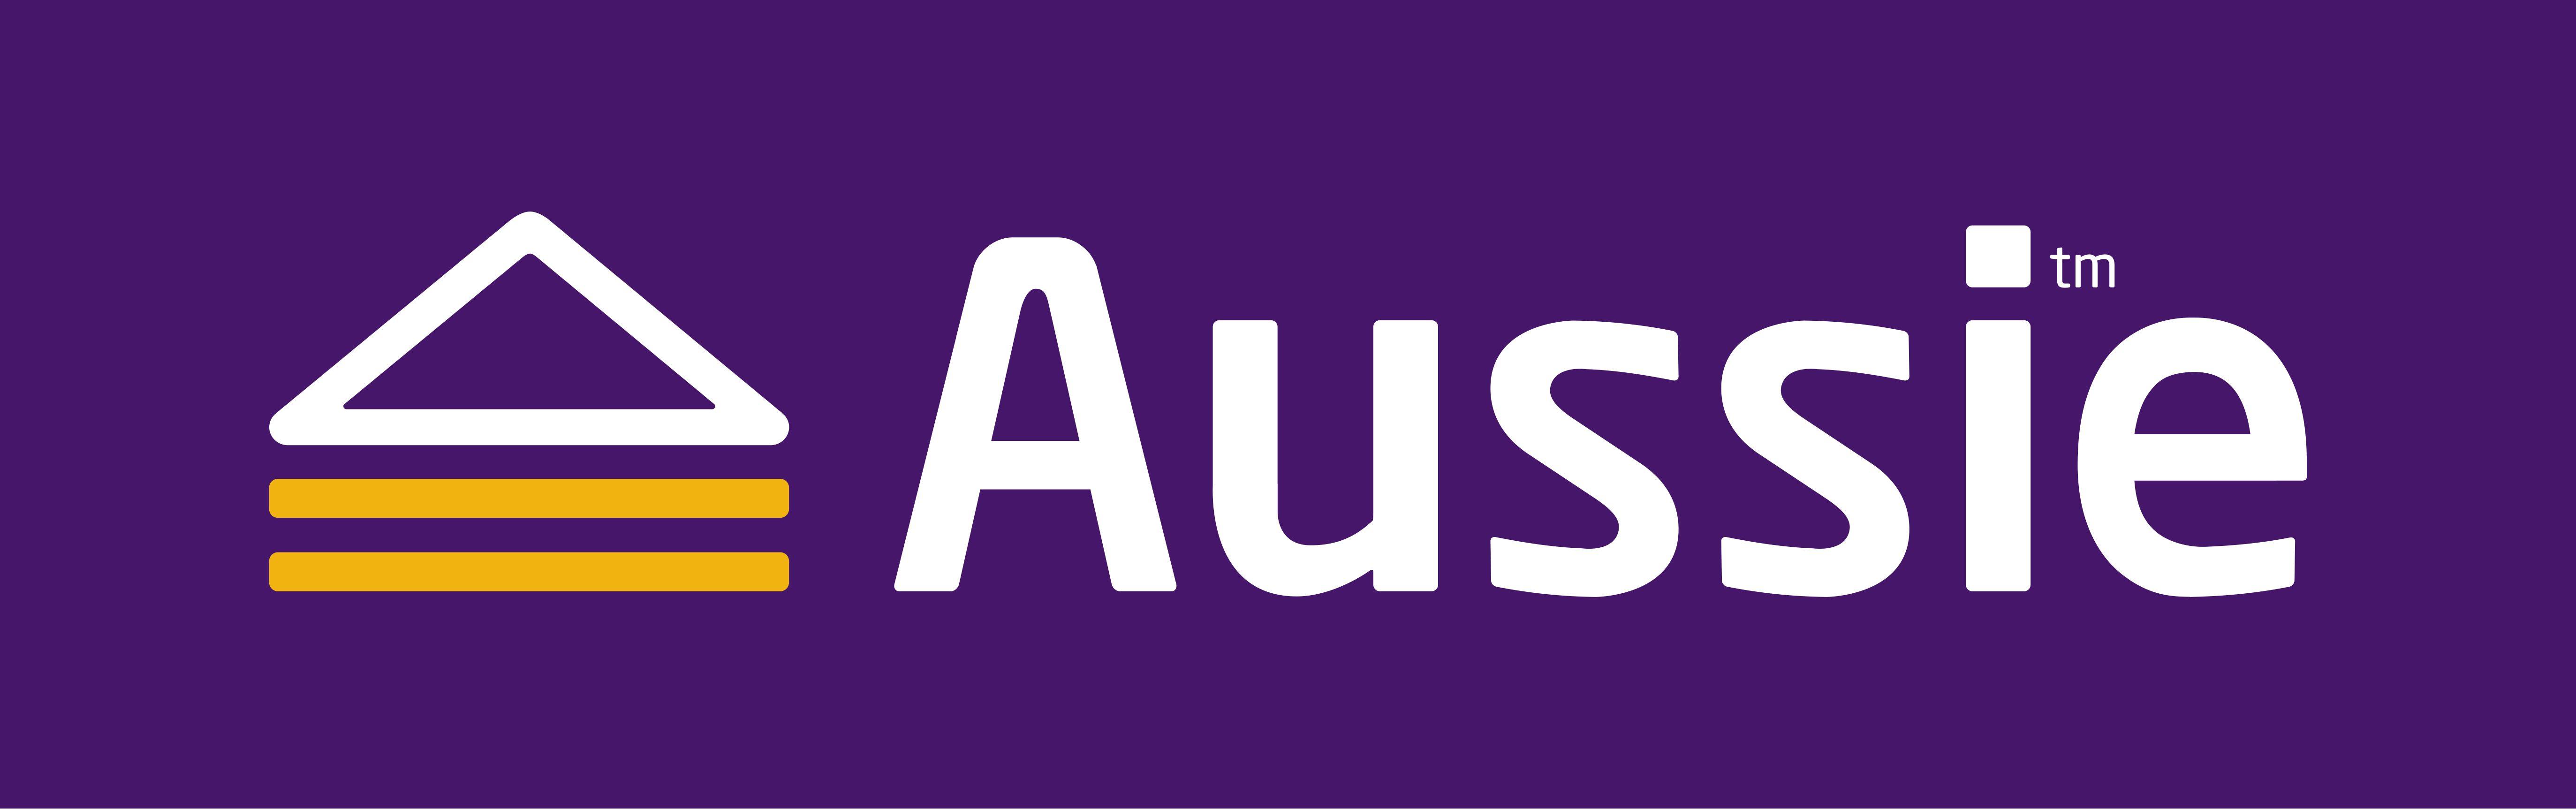 Aussie Logo - Aussie Logo High Res - CHYFMCHYFM